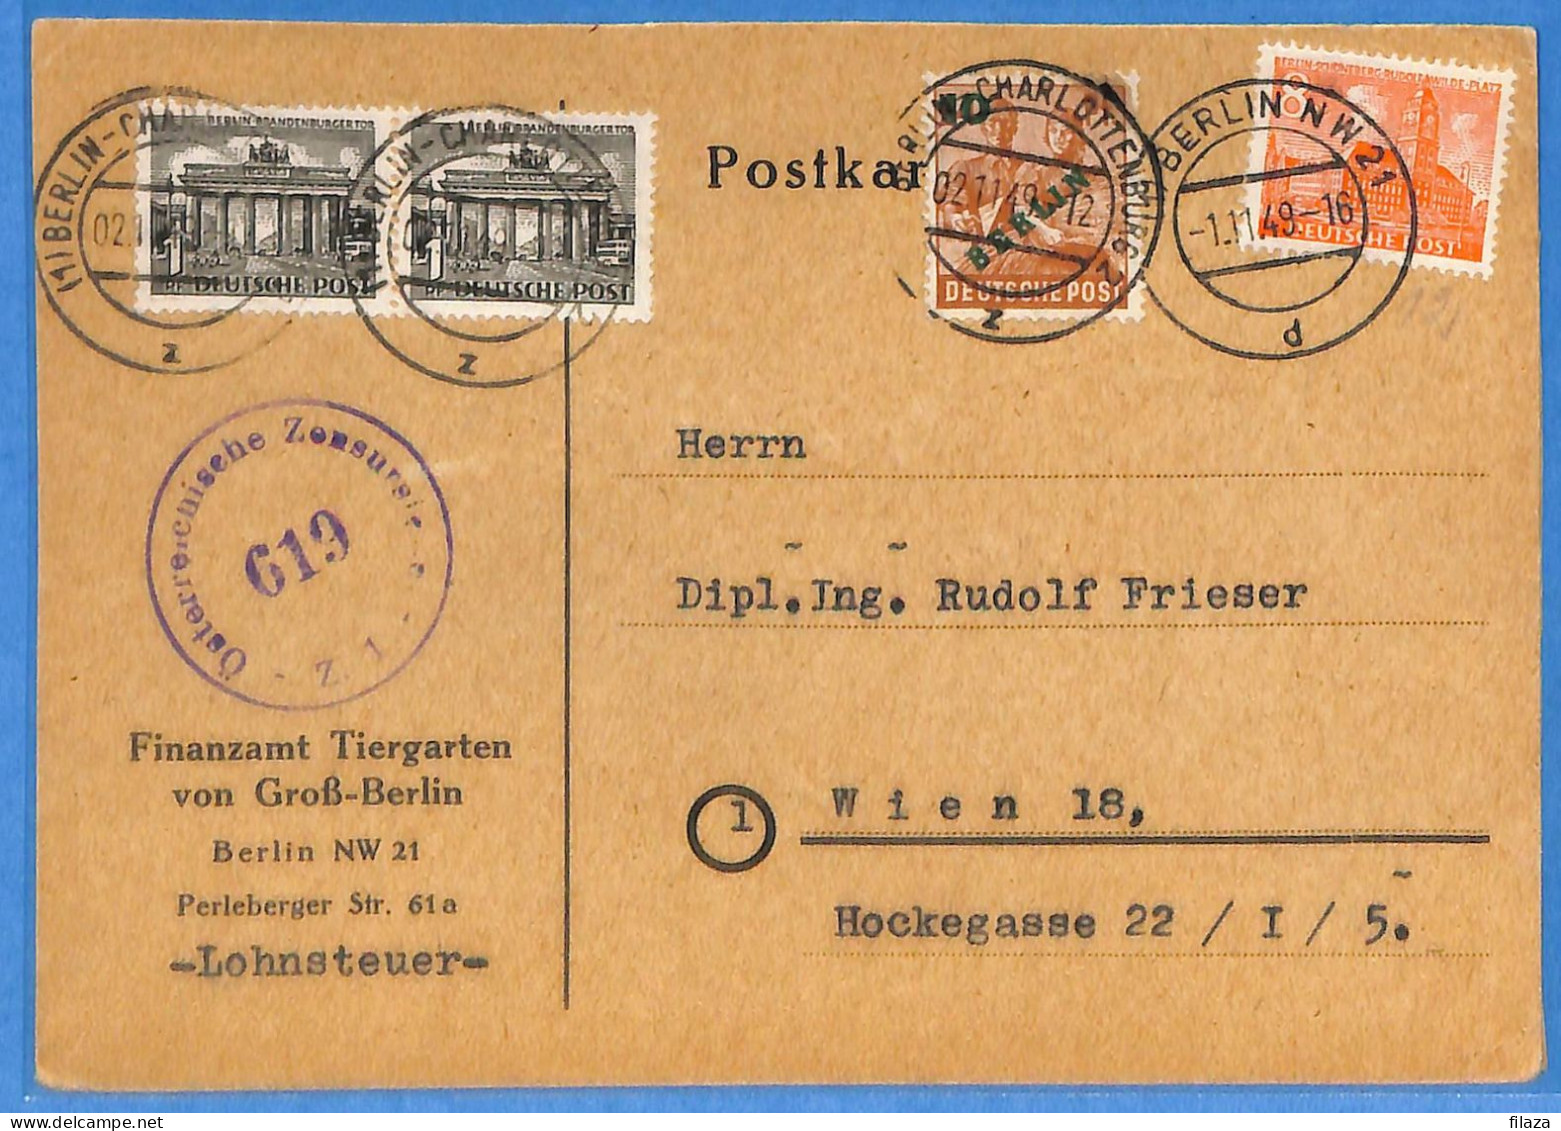 Berlin West 1949 - Carte Postale De Berlin - G33035 - Lettres & Documents